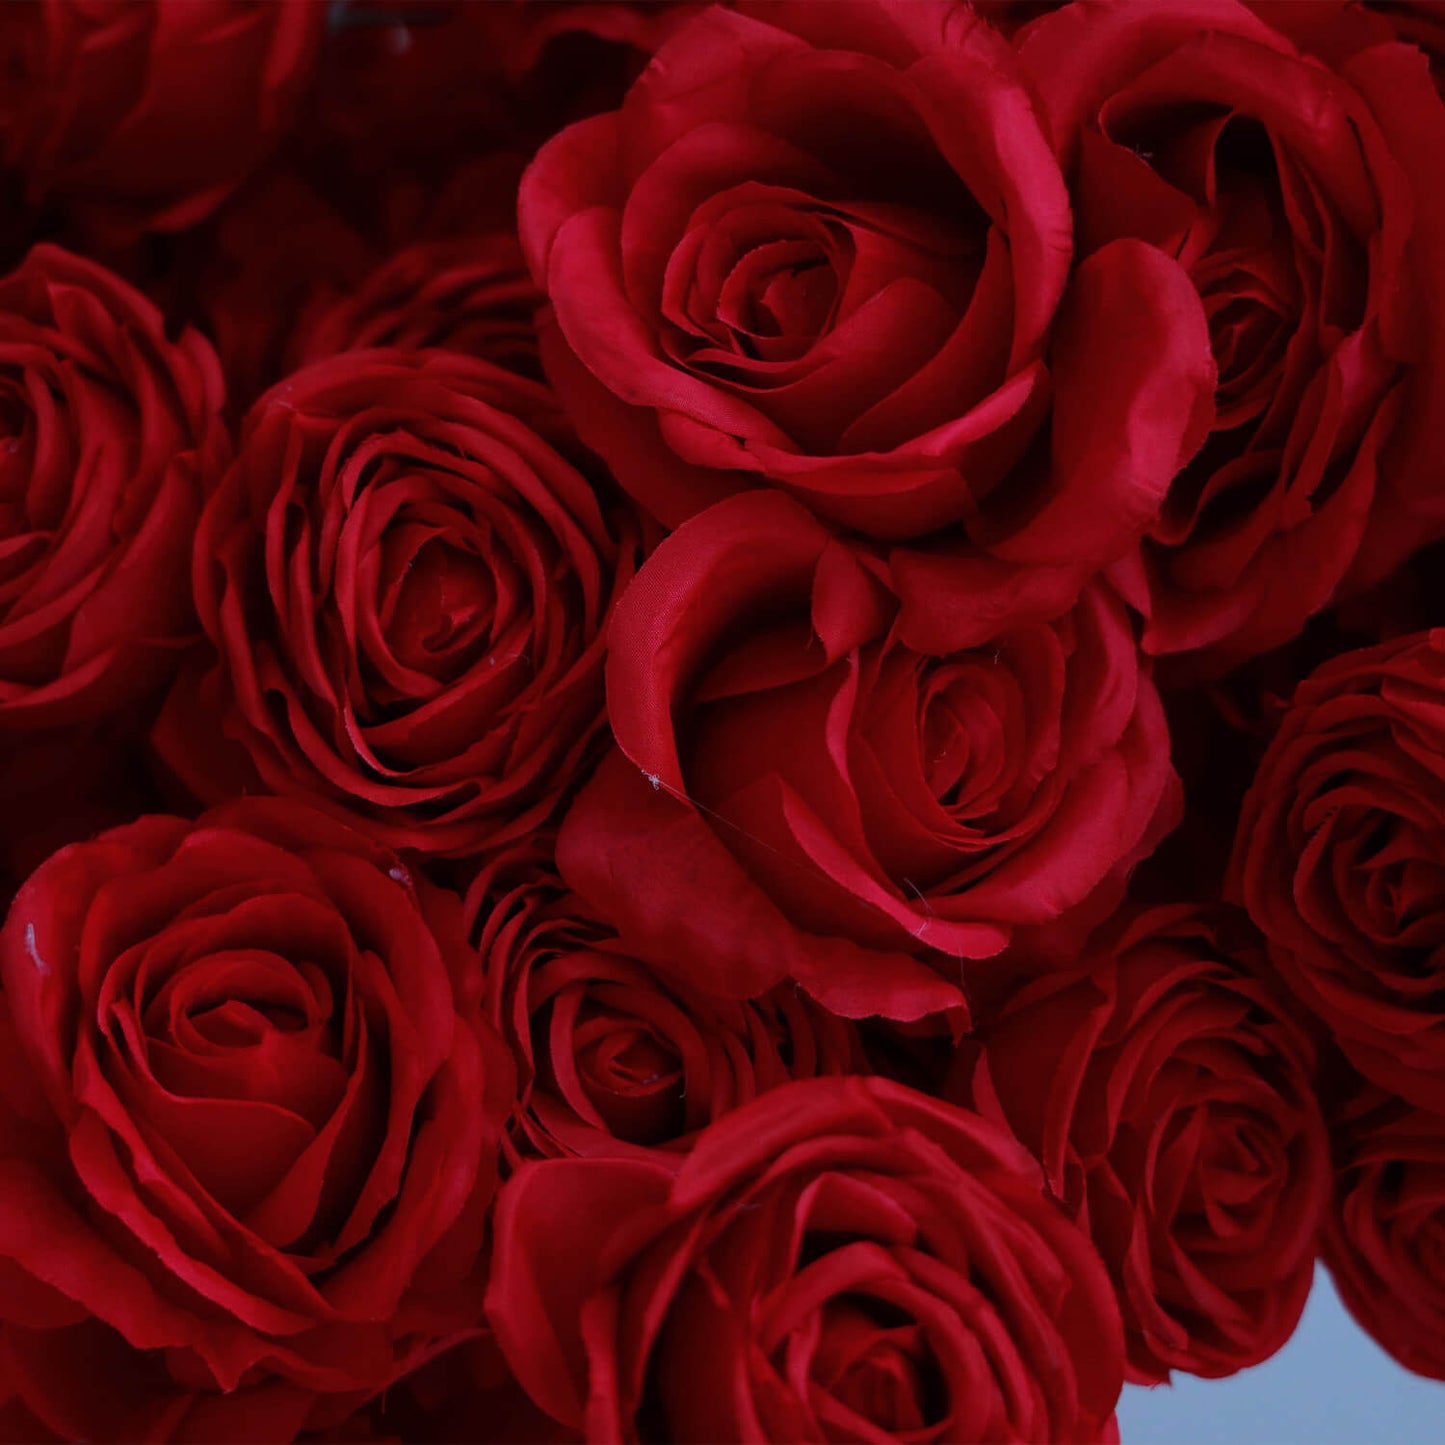 8ft White Rose Flower Wall Romantic Atmosphere Heart Shaped